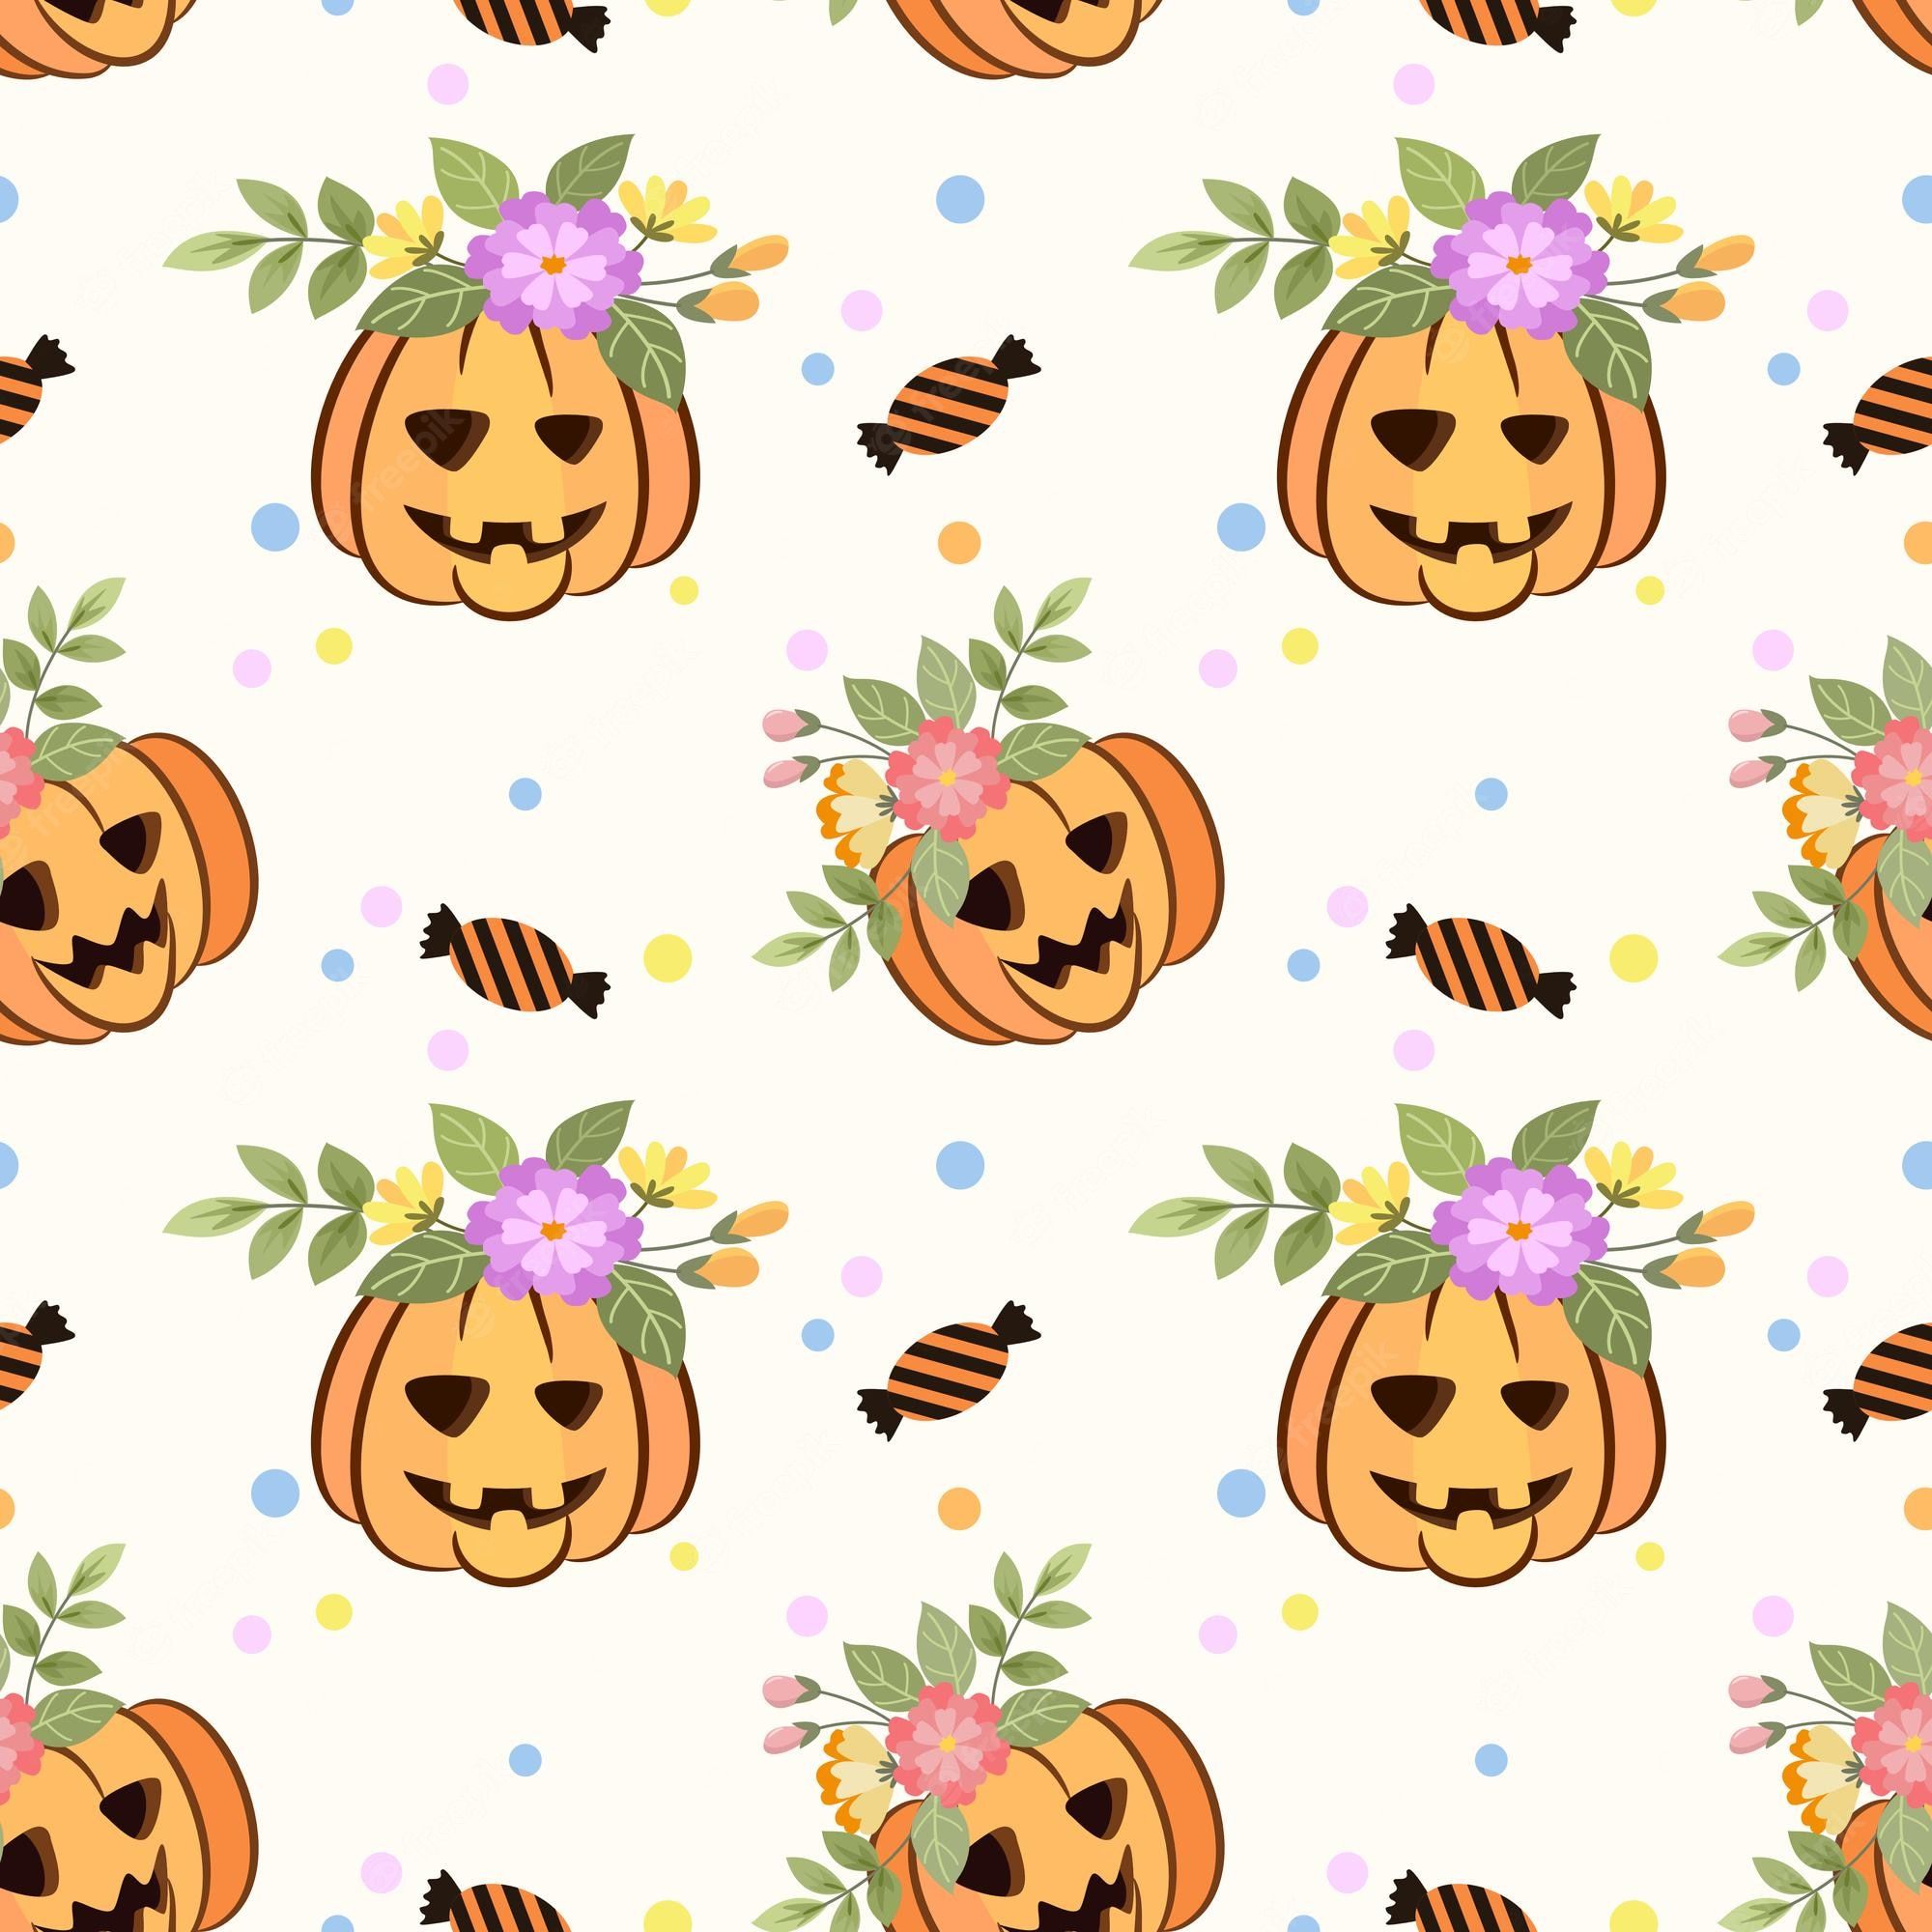 Premium Vector. Cute halloween pumpkin with flowers seamless pattern